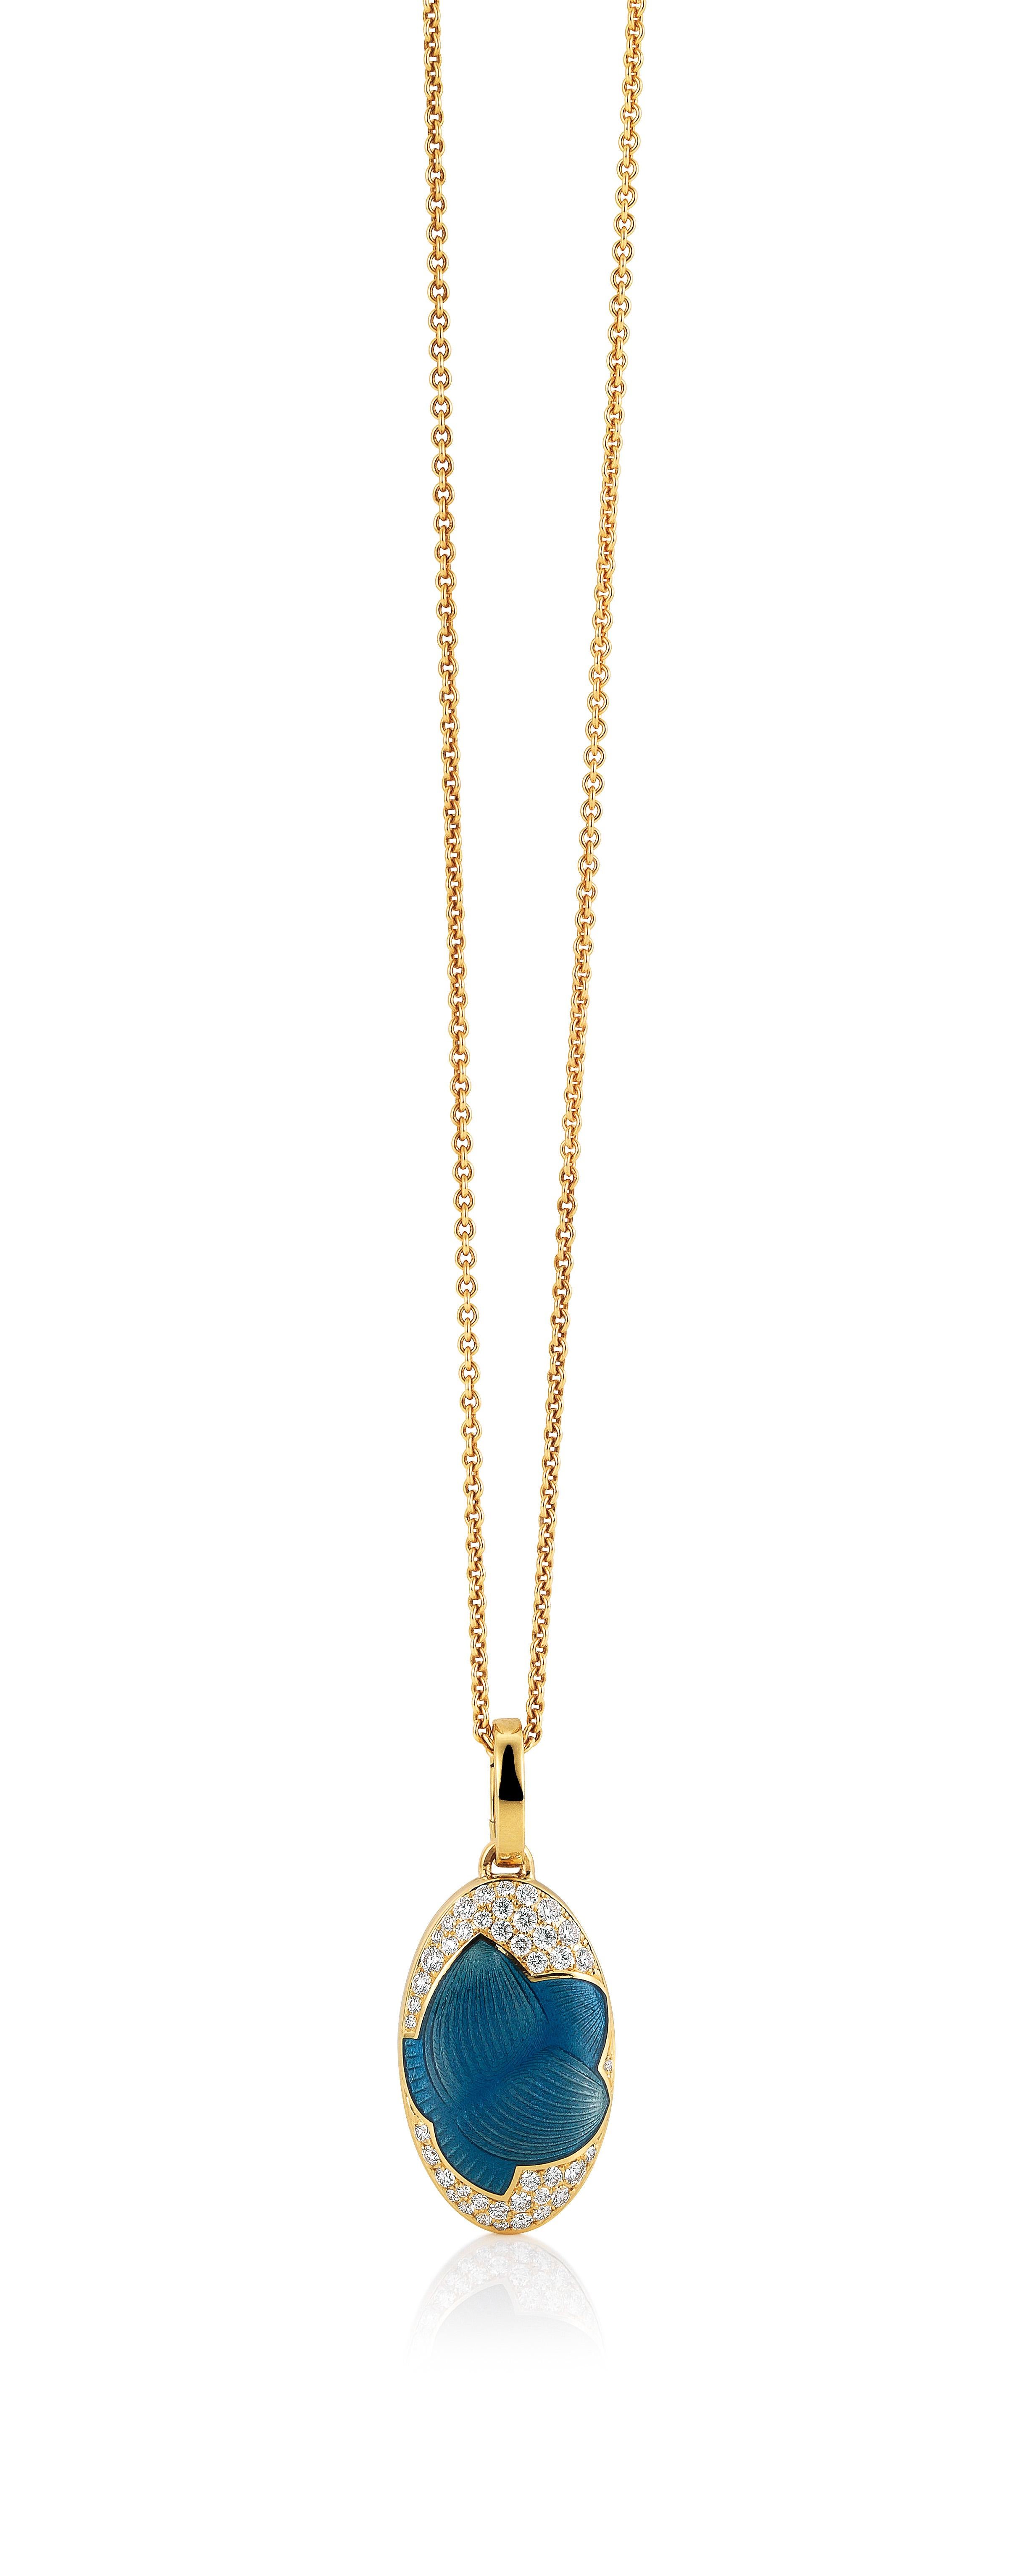 Brilliant Cut Oval Locket Pendant Necklace- 18k Yellow Gold - Blue Vitreous Enamel 43 Diamonds For Sale